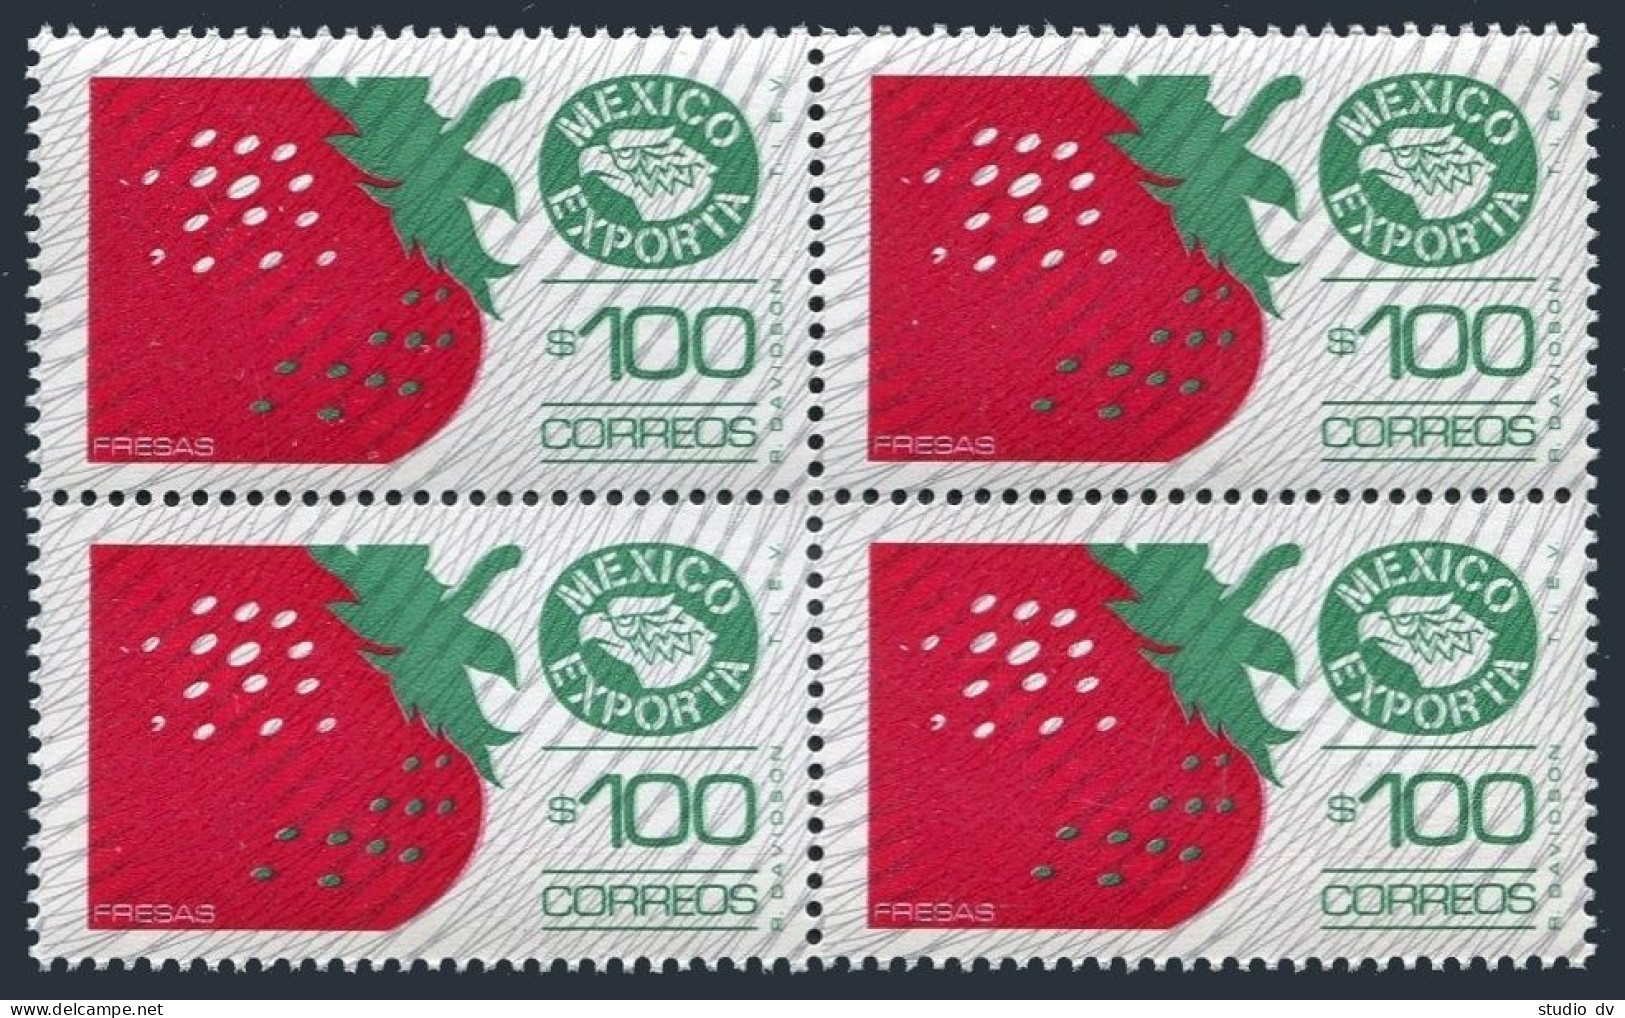 Mexico 1134 Block/4,MNH.Michel 1803Aax. Mexico Exports,1983. Strawberry. - Mexico